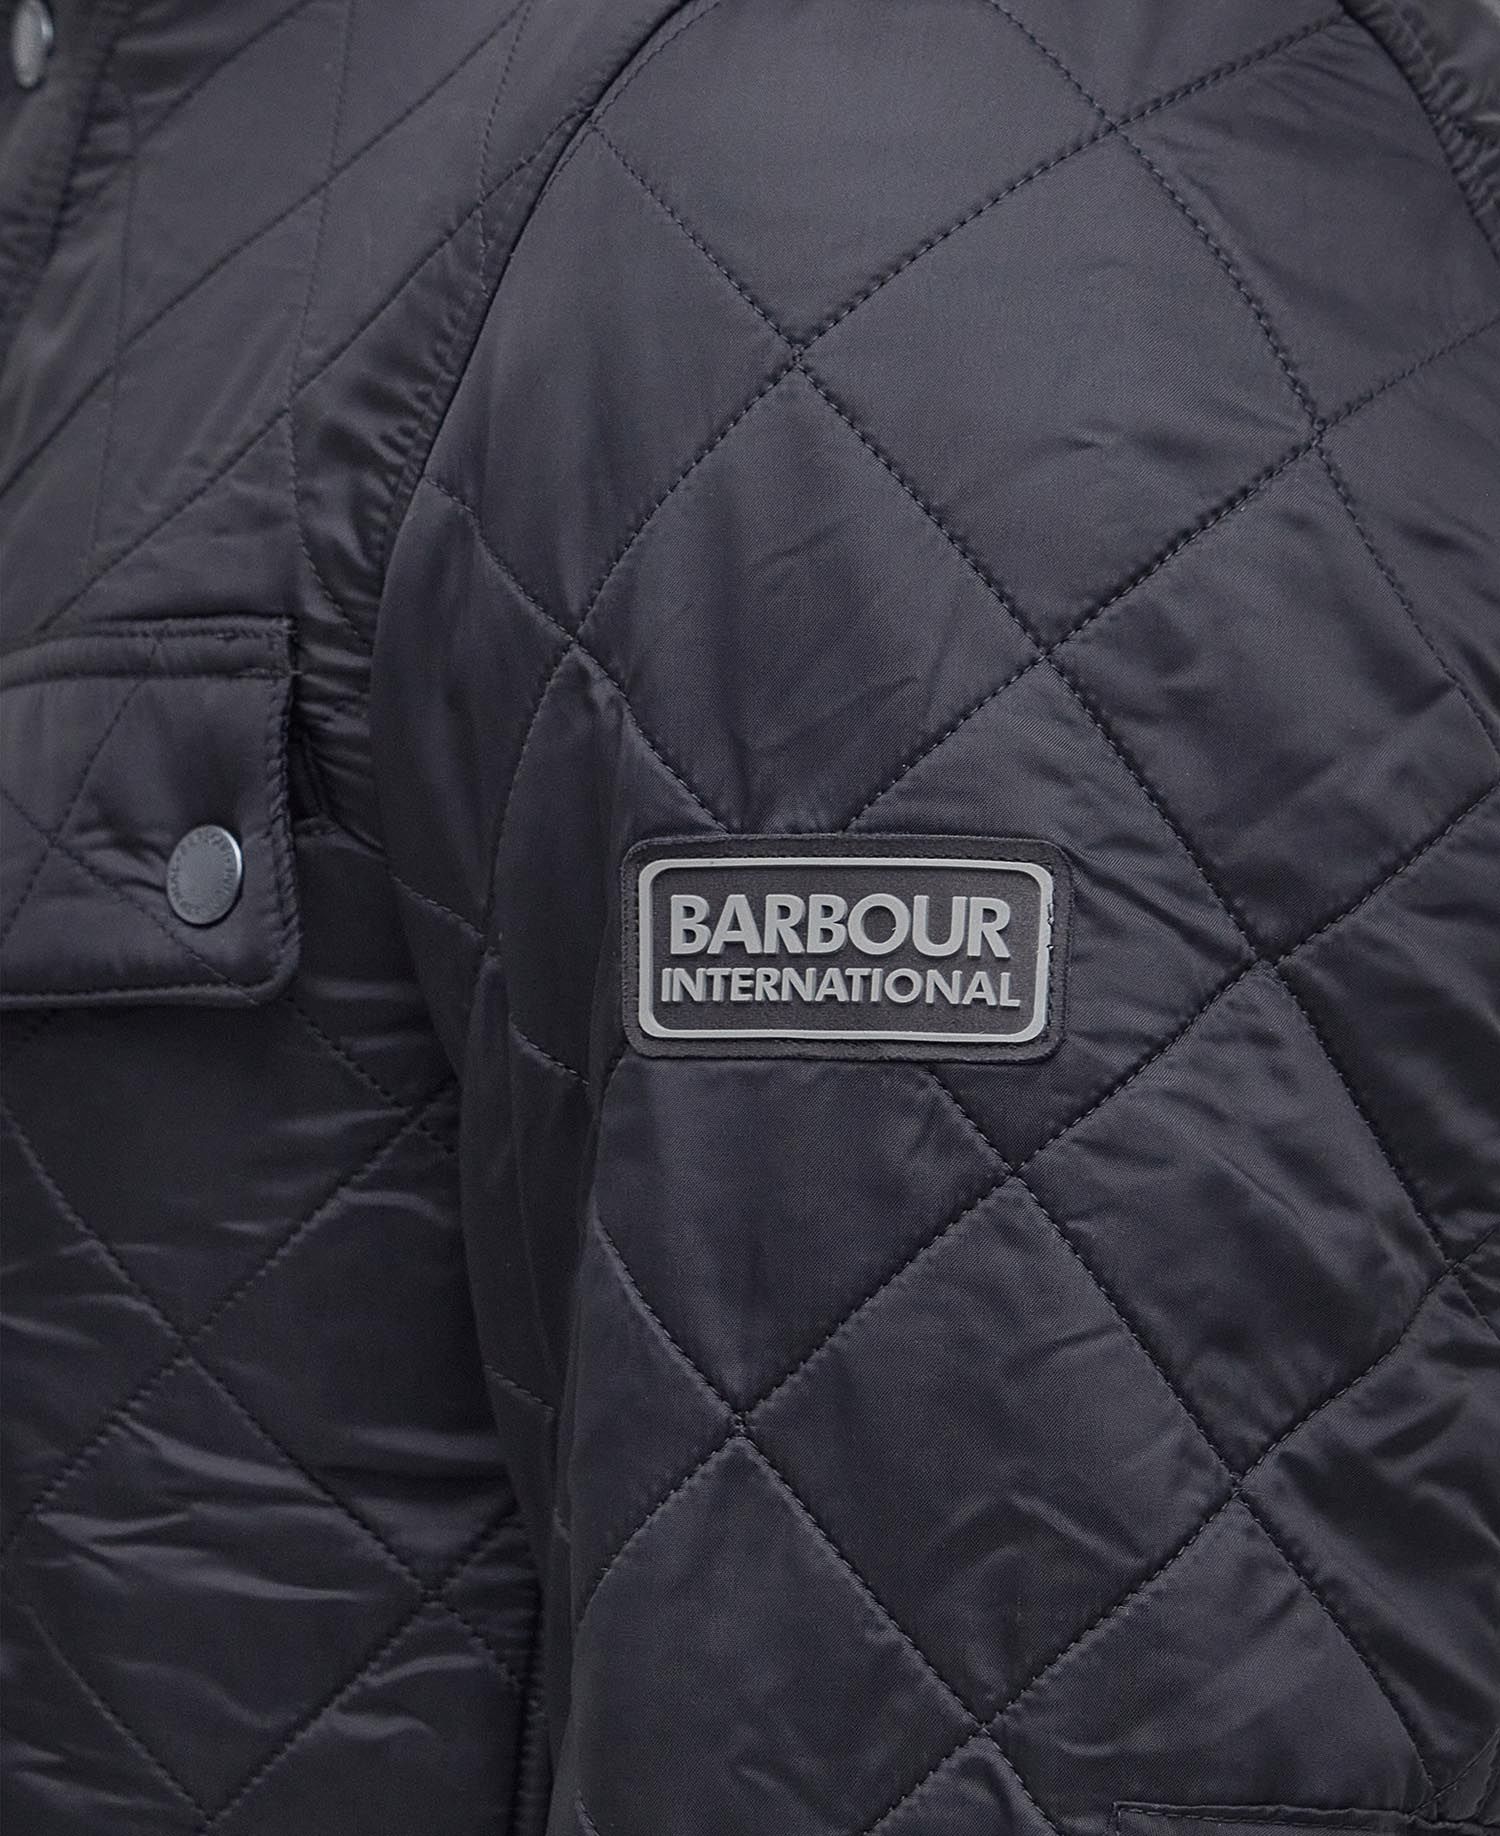 Shop the B.Intl Tourer Ariel Polar Quilted Jacket today. | Barbour